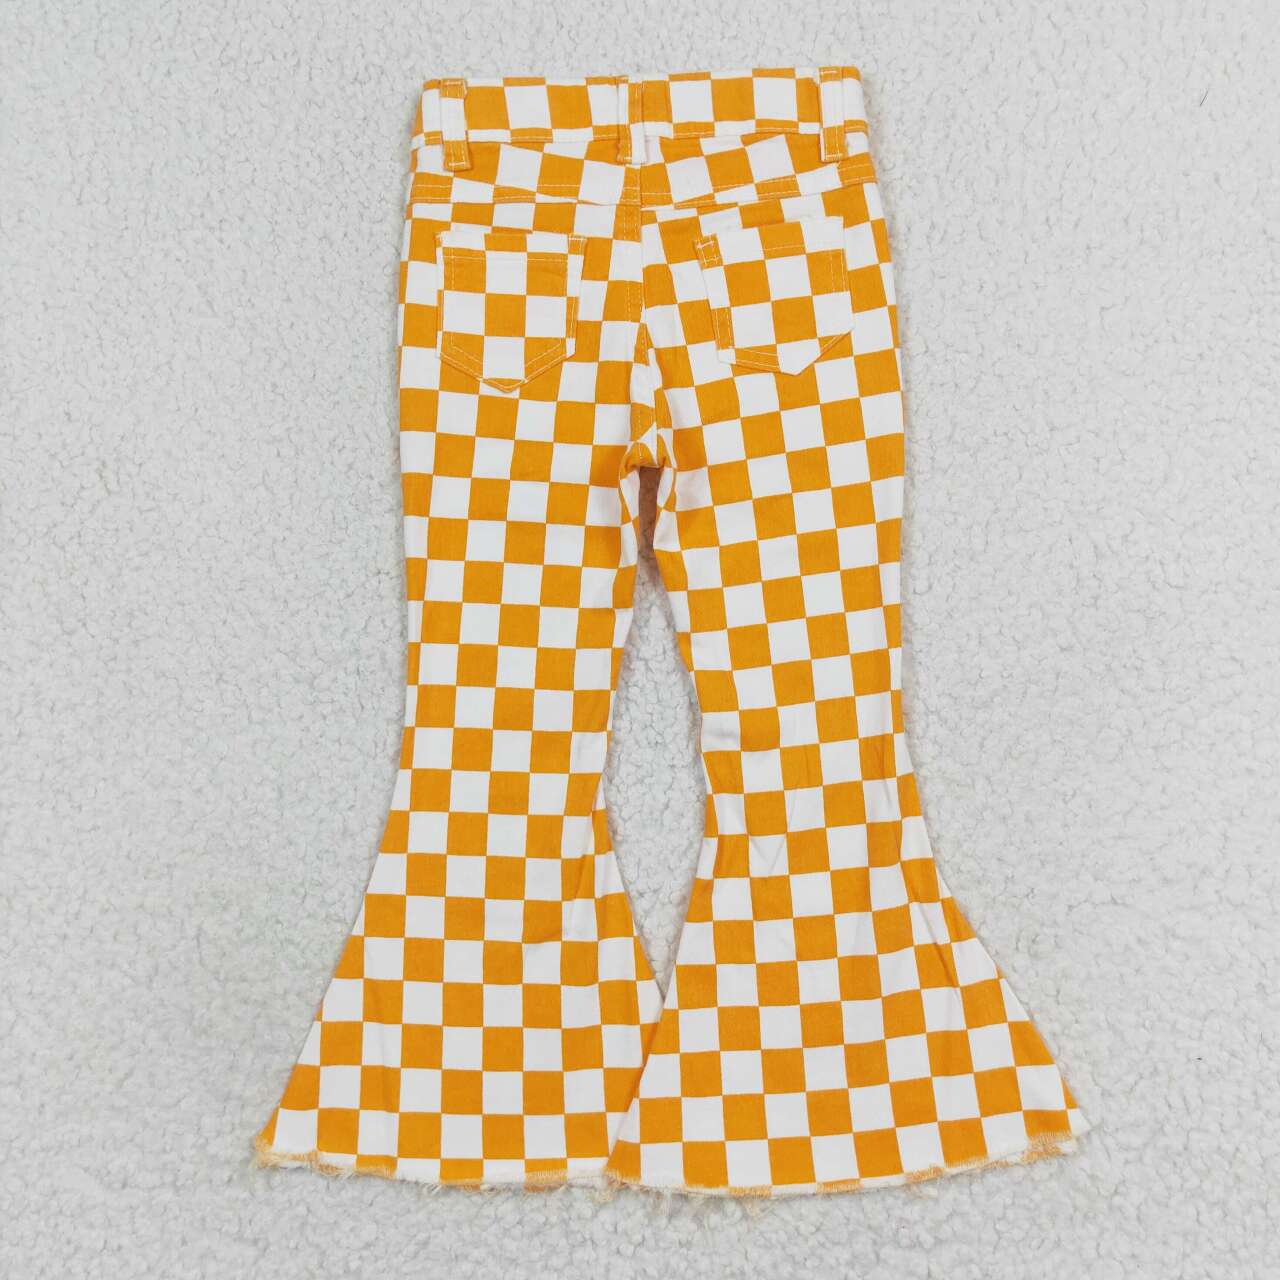 P0468 orange checkered girls denim pants girls jeans